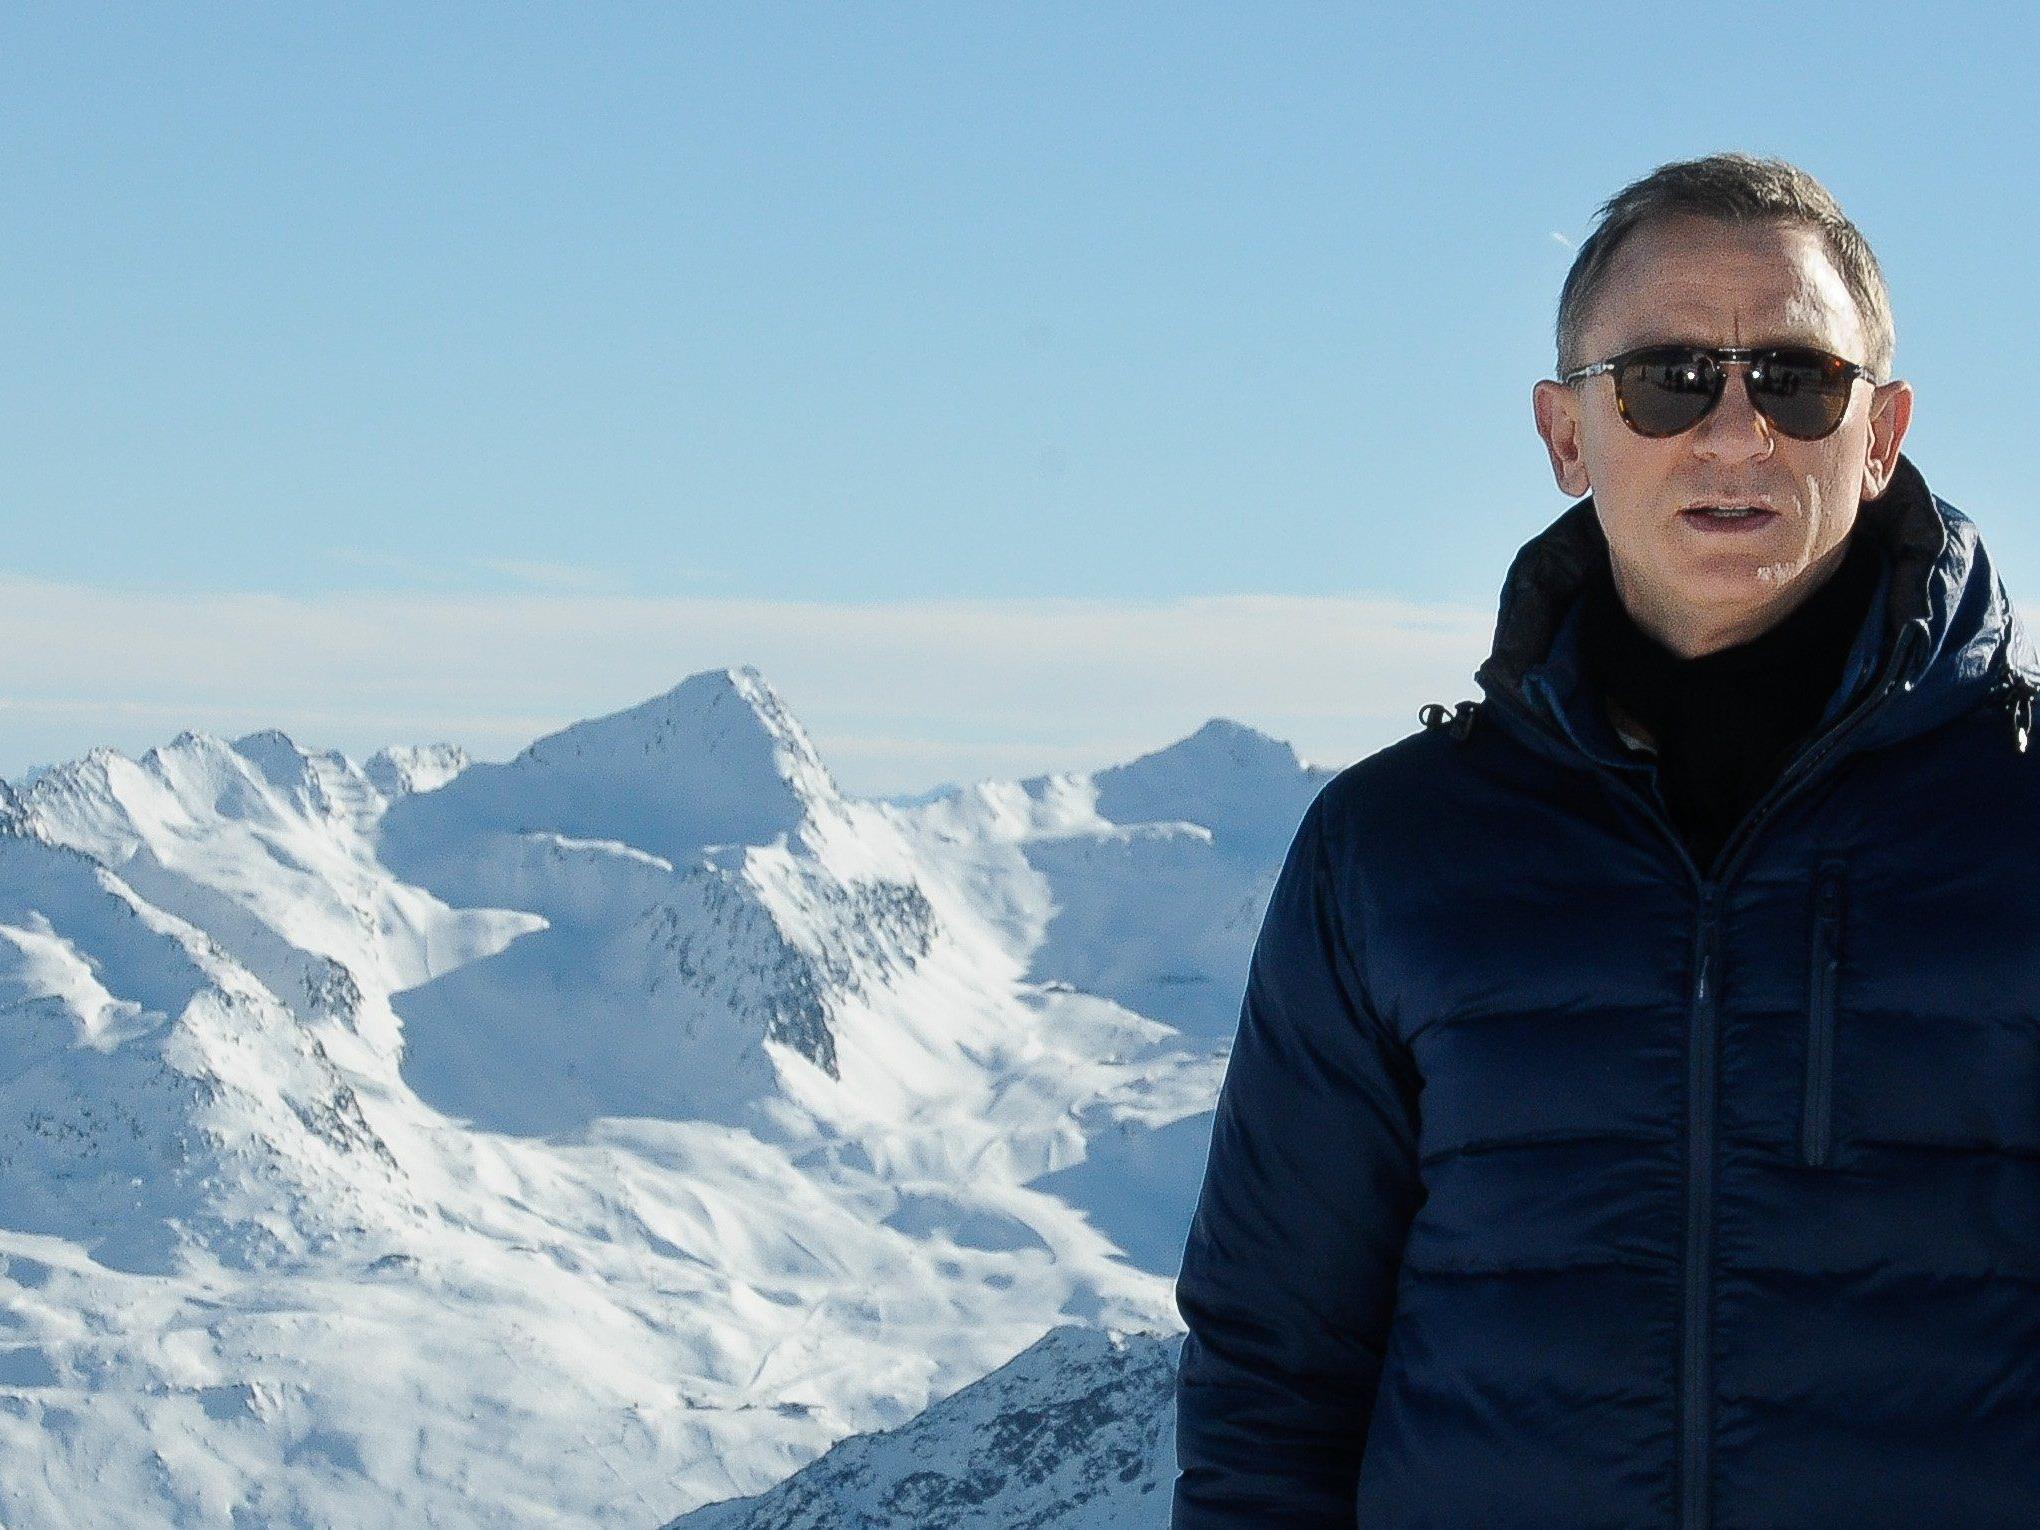 Bond-Dreharbeiten in Kärnten brachten indirekten Tourismusschub